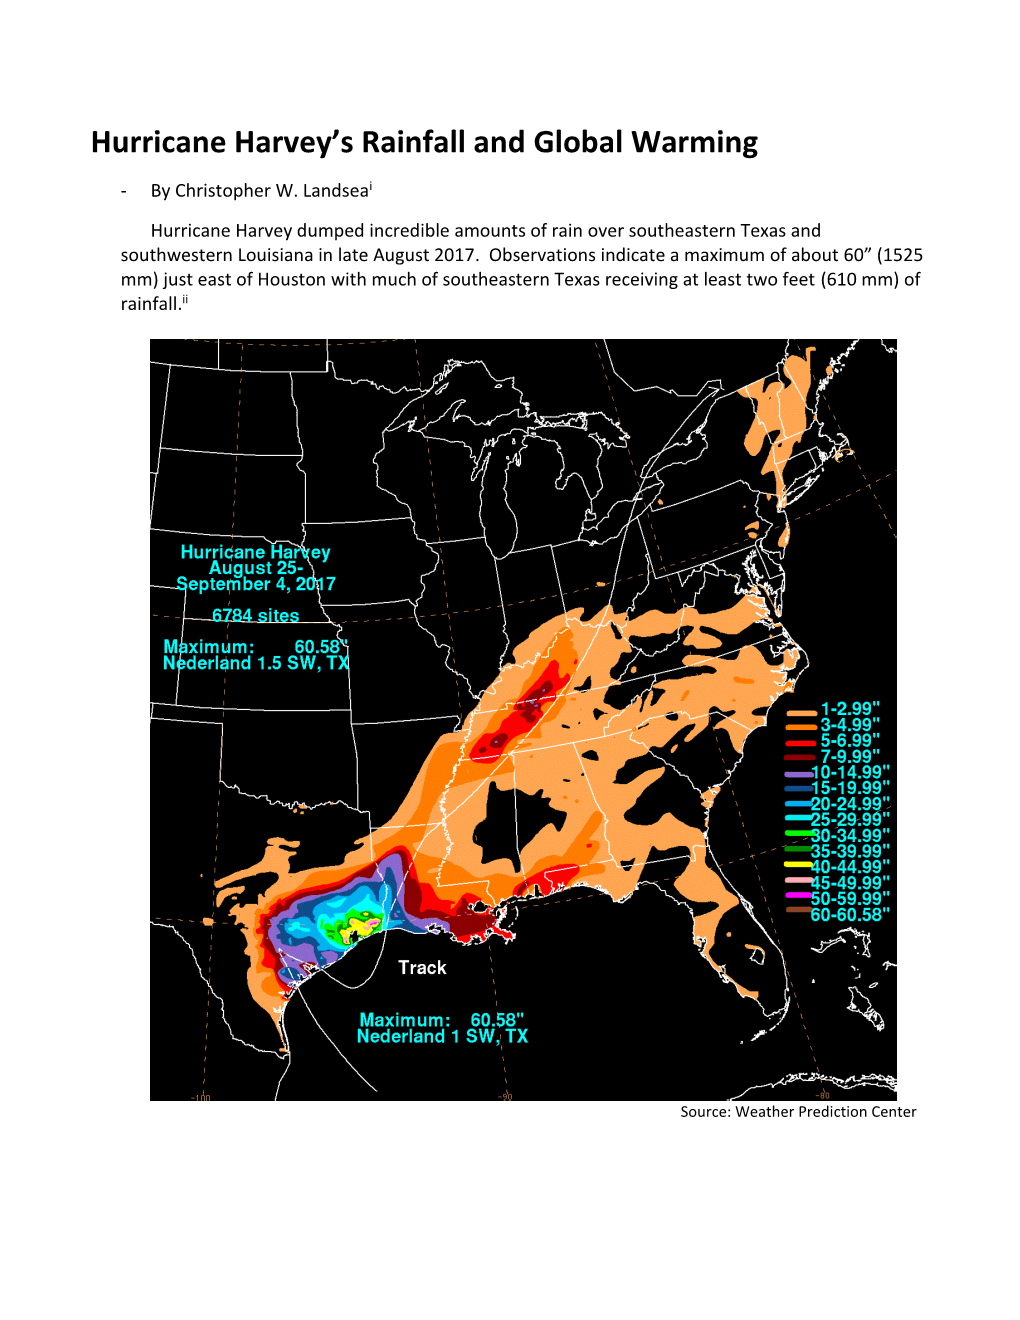 Essay on Hurricane Harvey's Rainfall and Global Warming